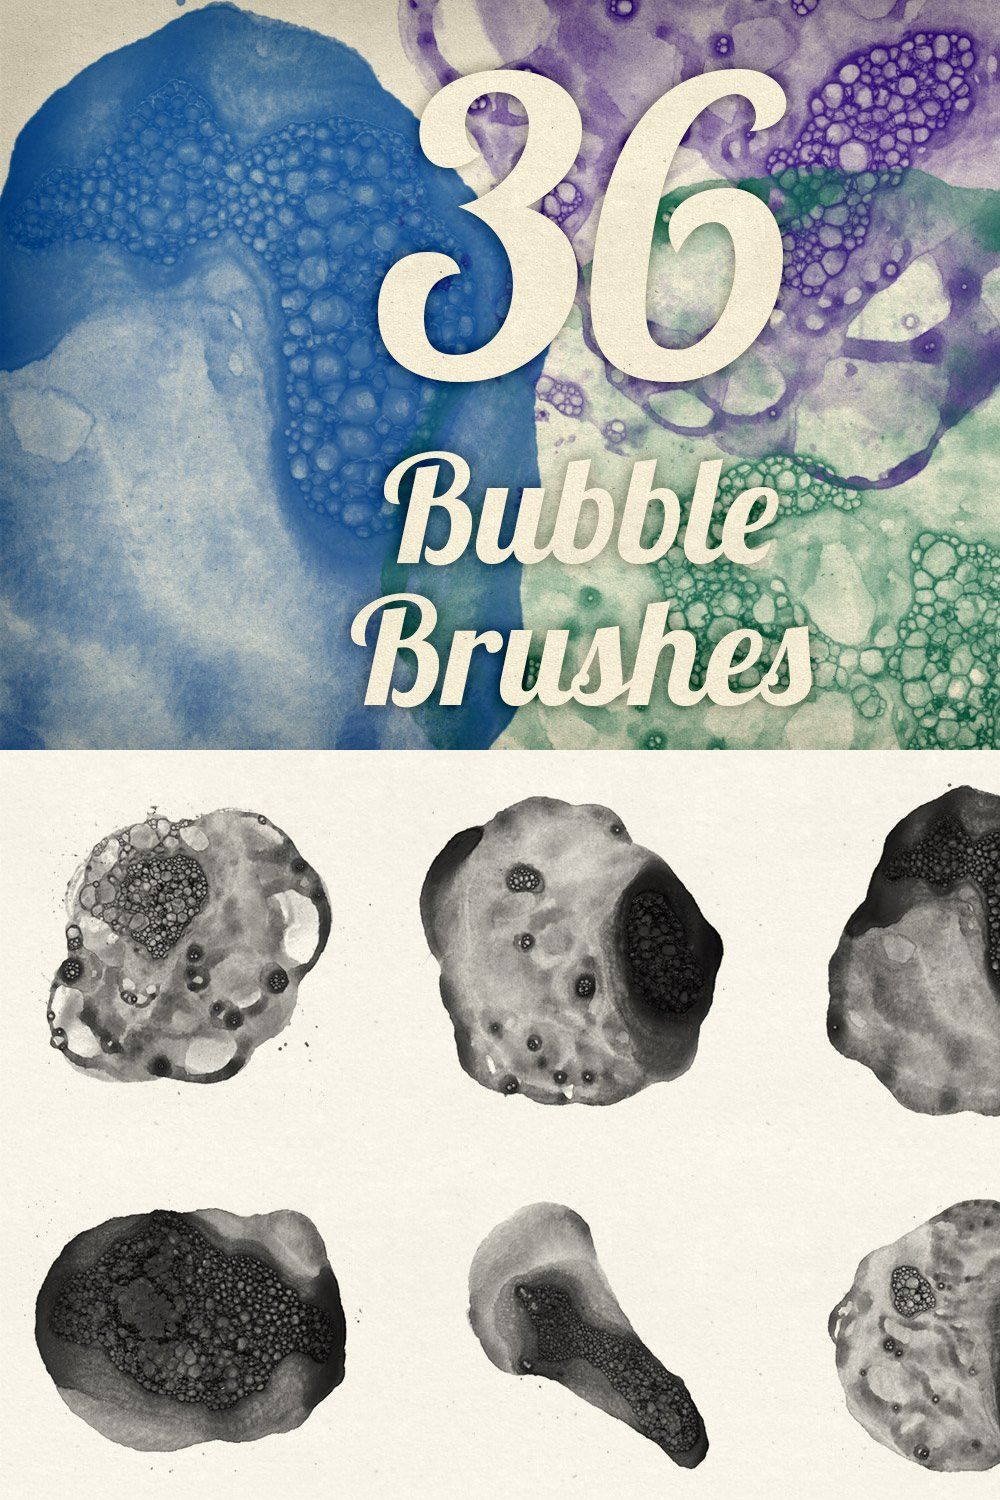 Bubble Textures Brush Pack 1 pinterest preview image.